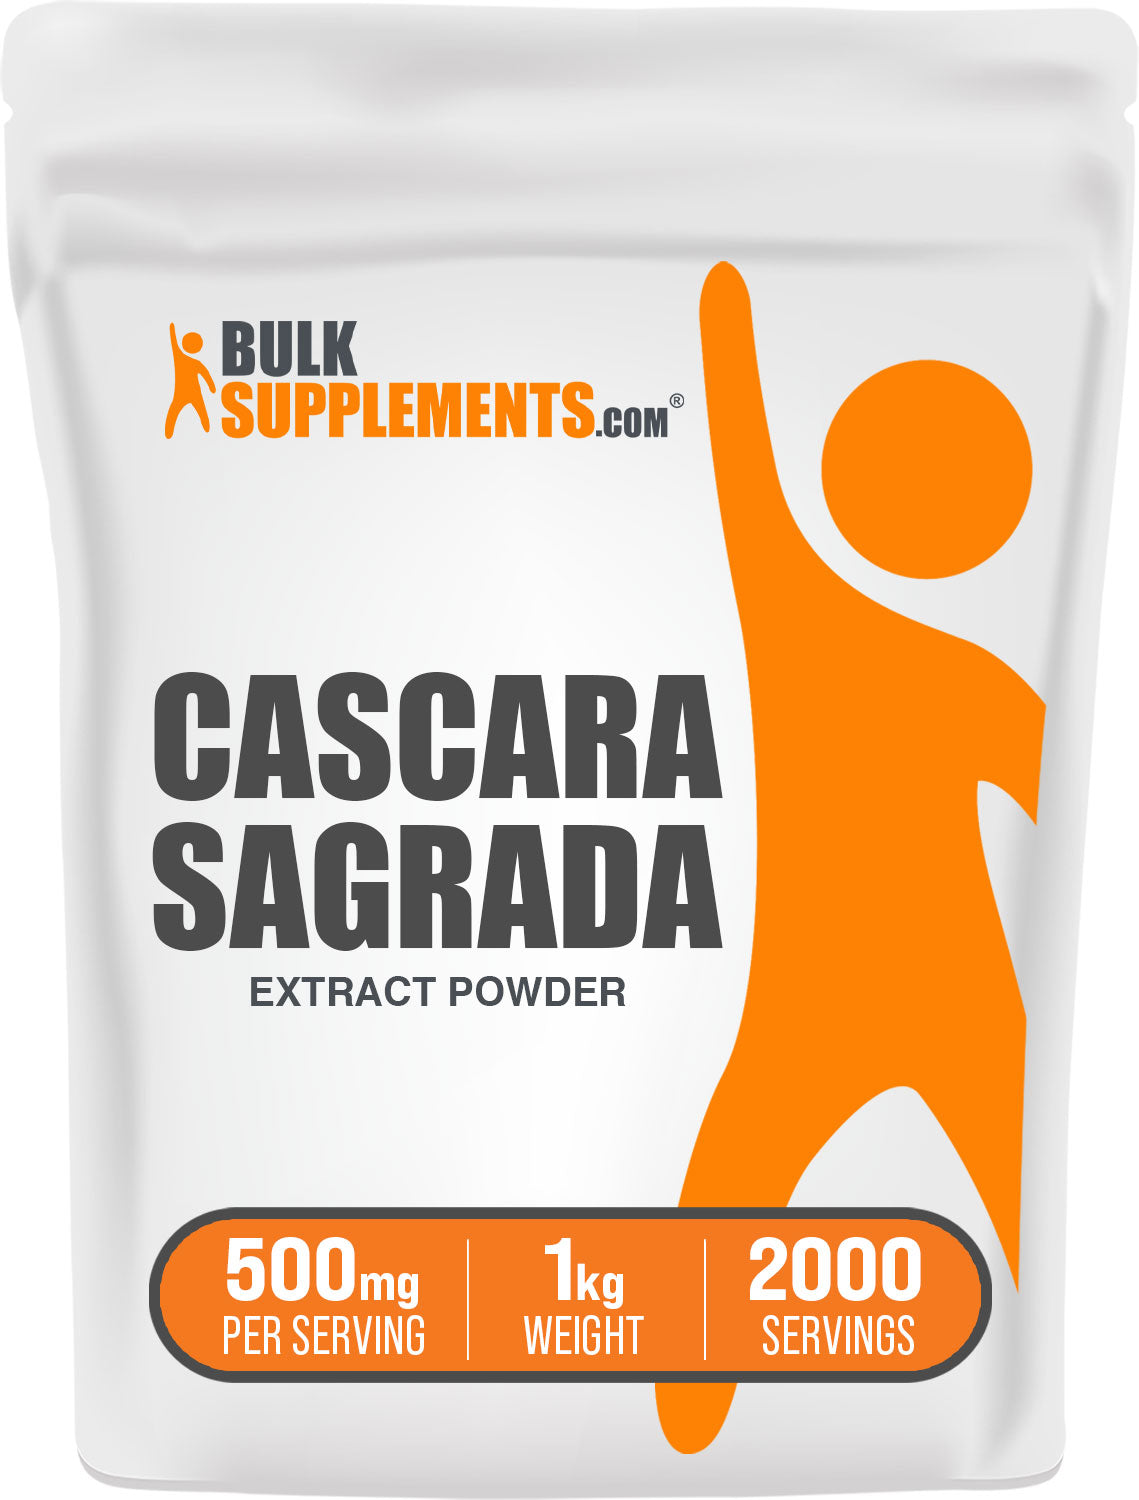 1kg of cascara sagrada